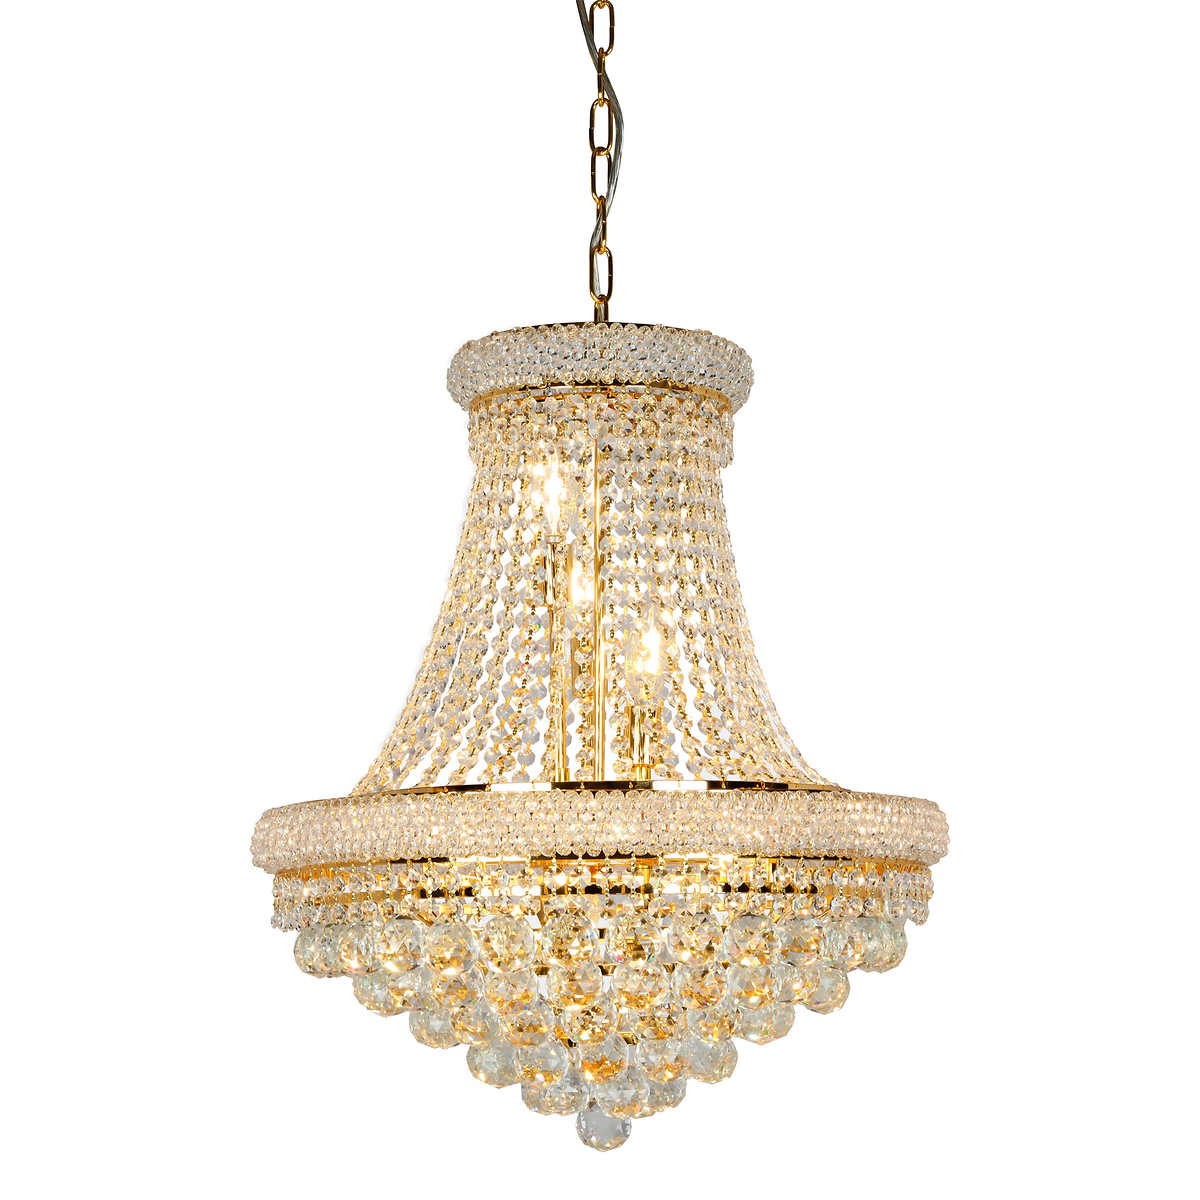 mc-collection-luminaire-suspendu-century-chandelier-pendant-light